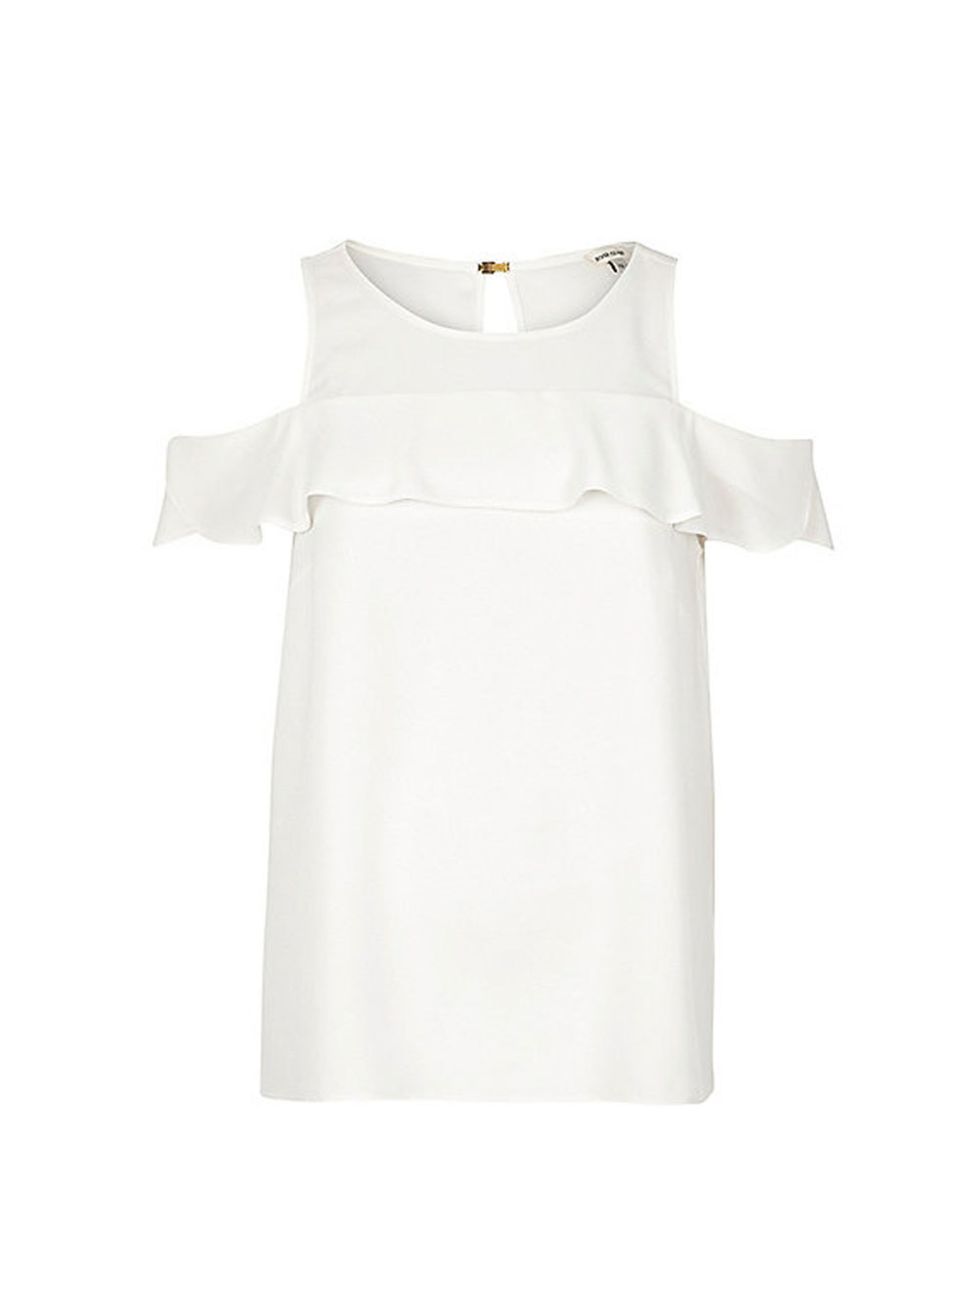 Sleeve, White, Day dress, One-piece garment, Active shirt, Fashion design, Silver, 